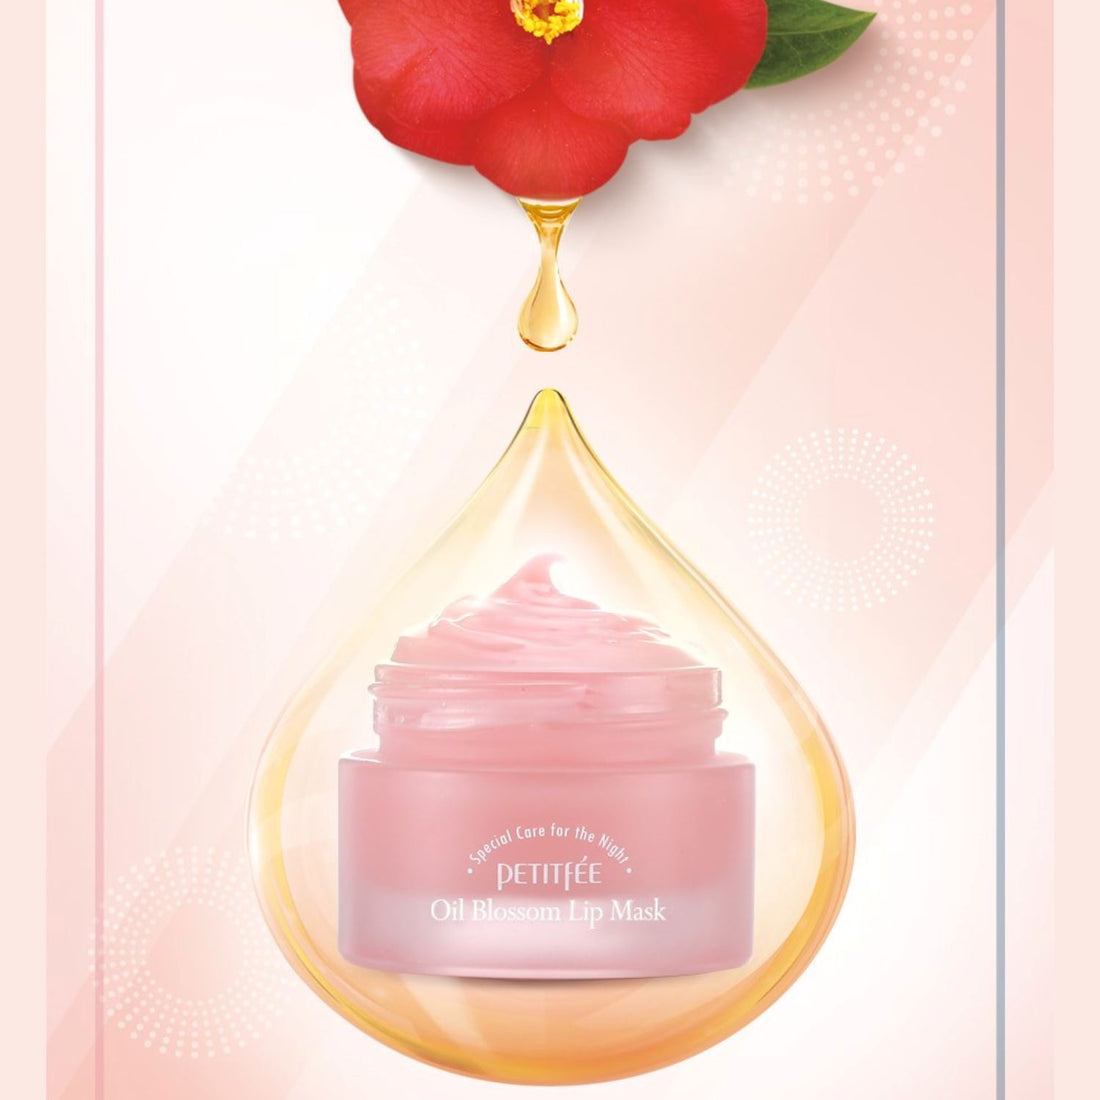 Petitfee Oil Blossom Lip Mask (Camelia Seed Oil) 15g Skin Care Petitfee ORION XO Sri Lanka